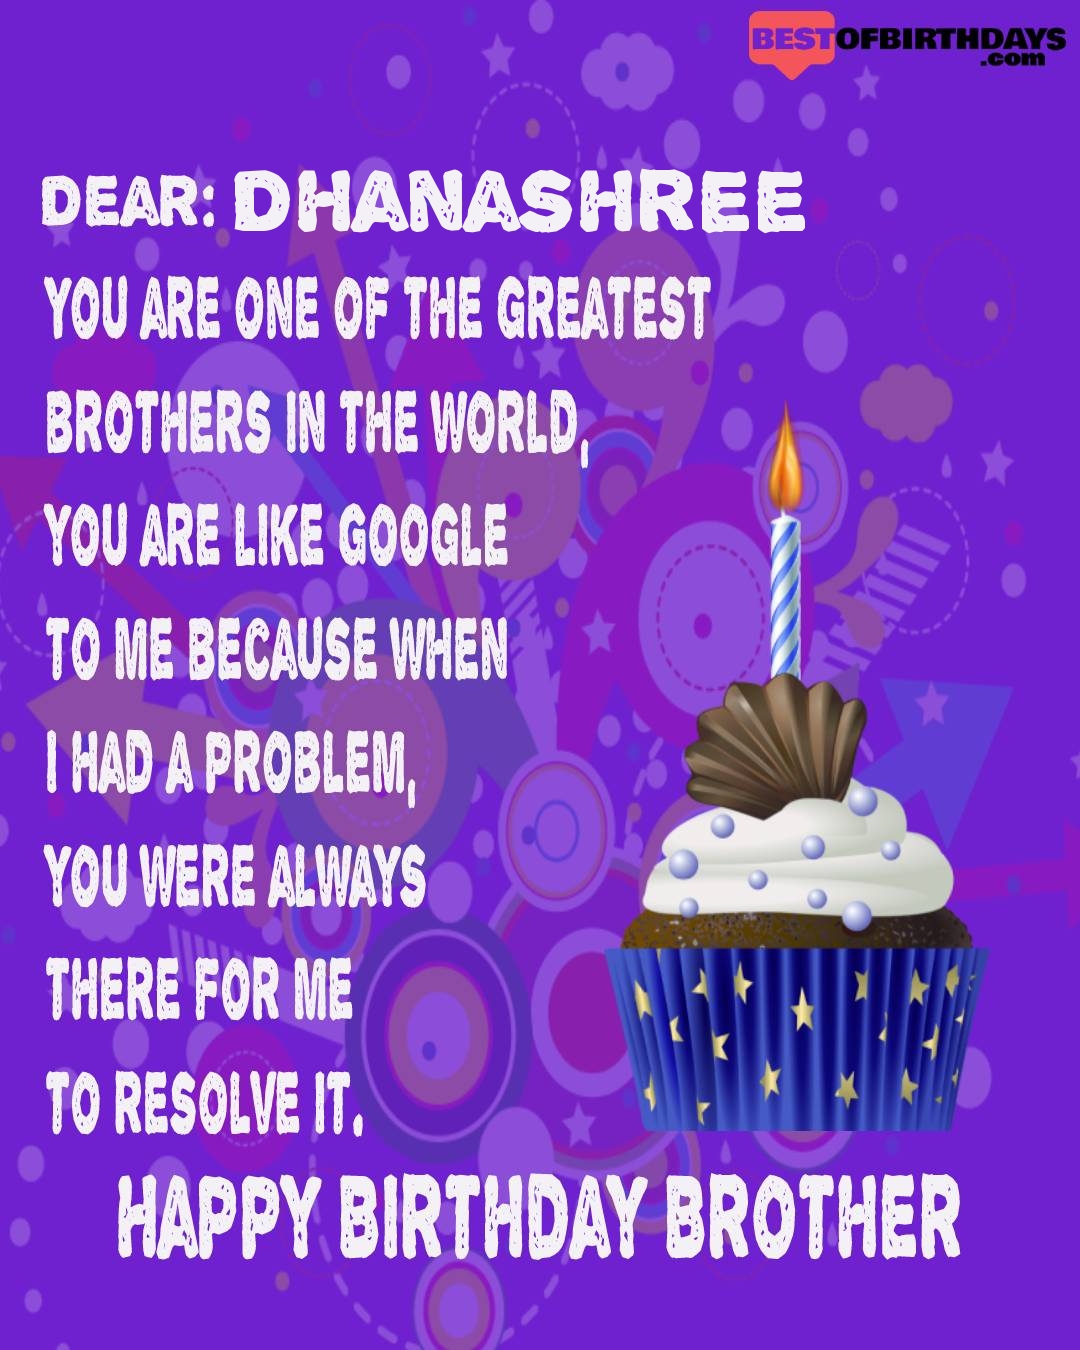 Happy birthday dhanashree bhai brother bro